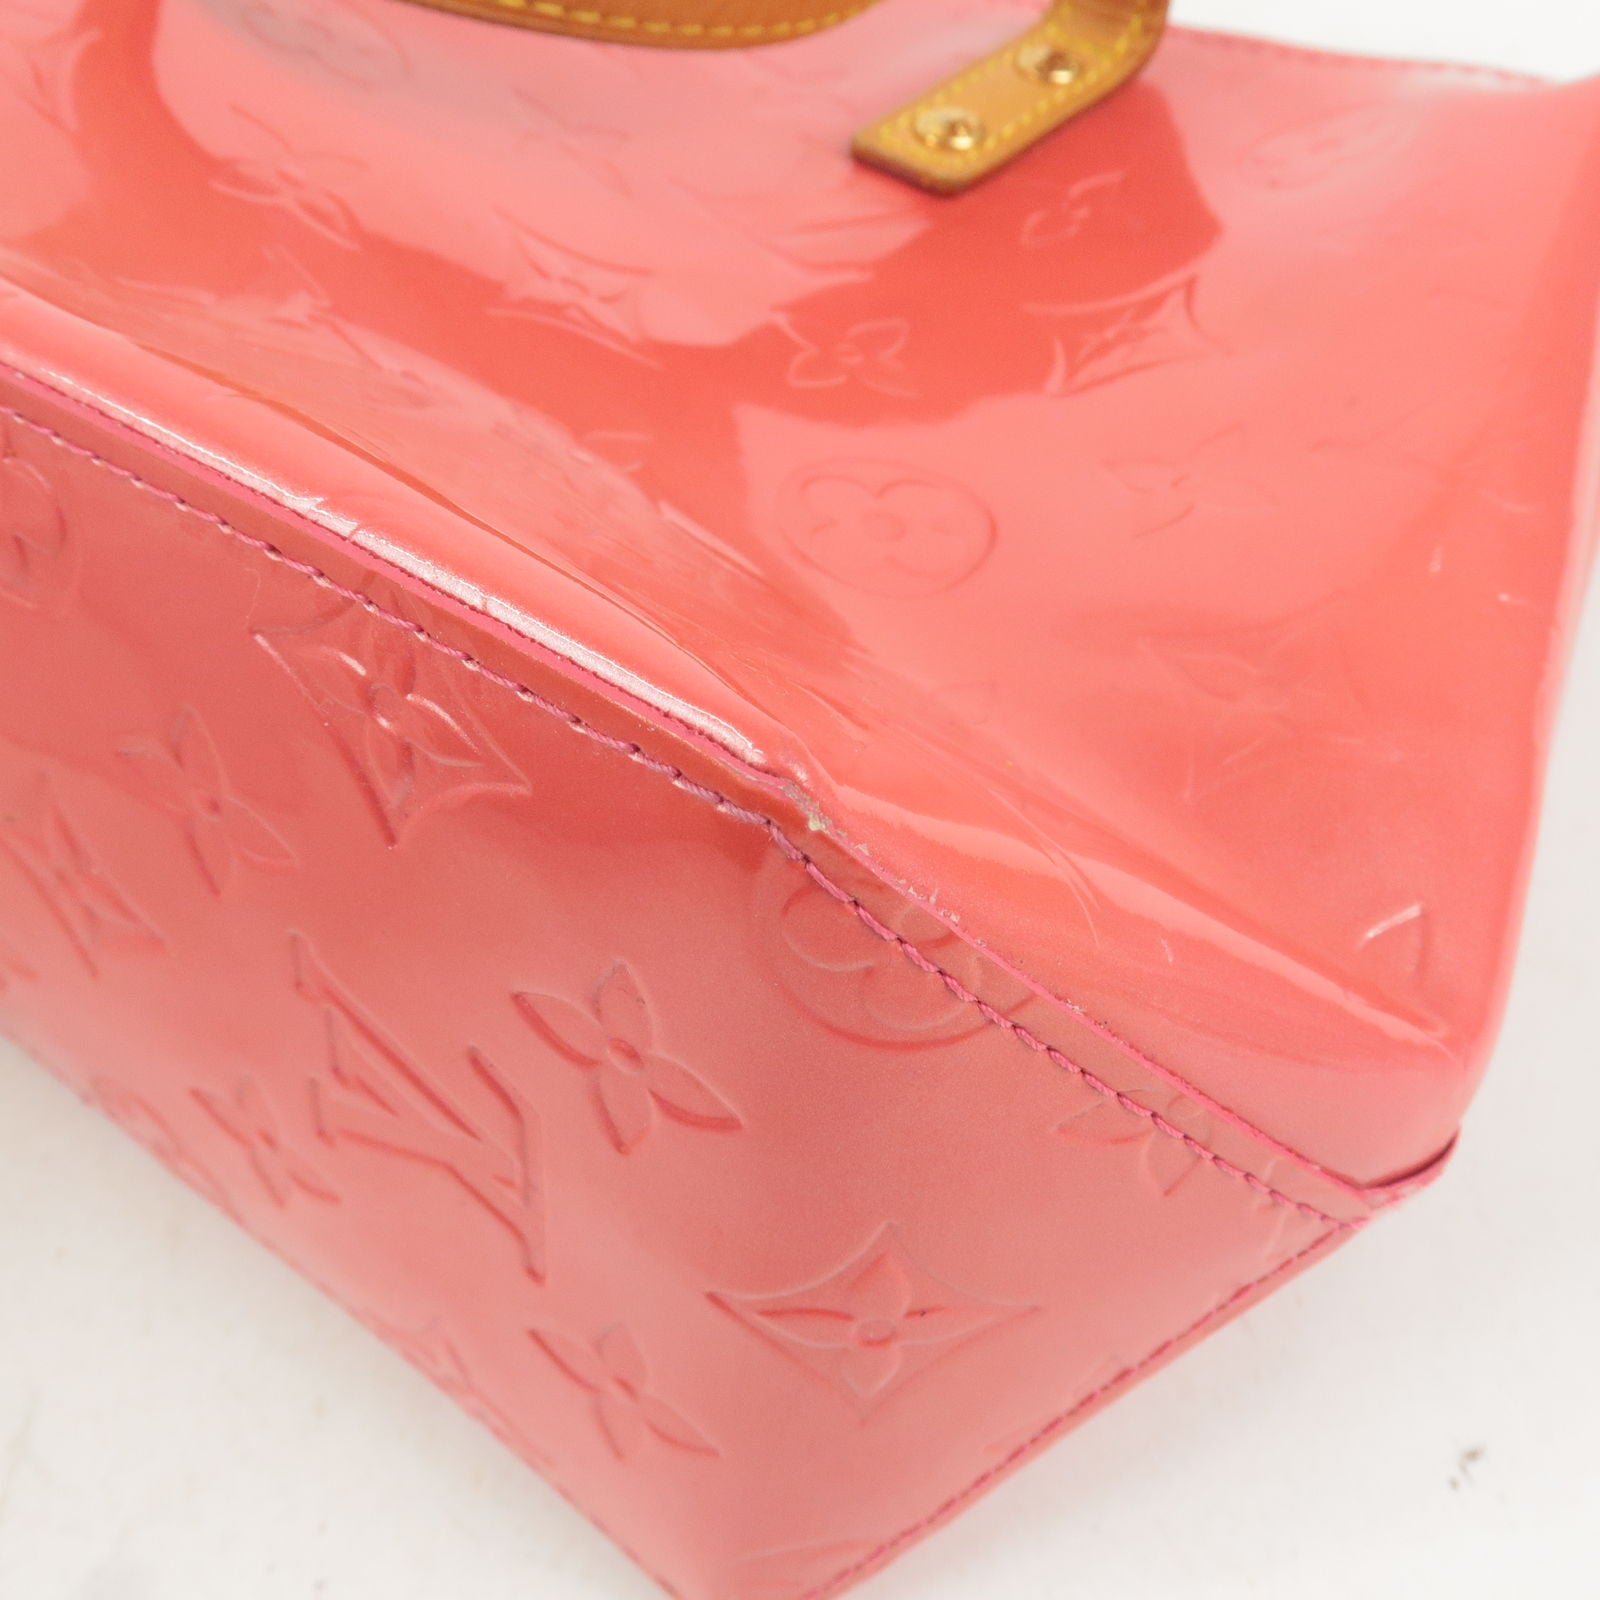 Louis Vuitton Vernis #pink  Louis vuitton handbags, Louis vuitton bag, Louis  vuitton